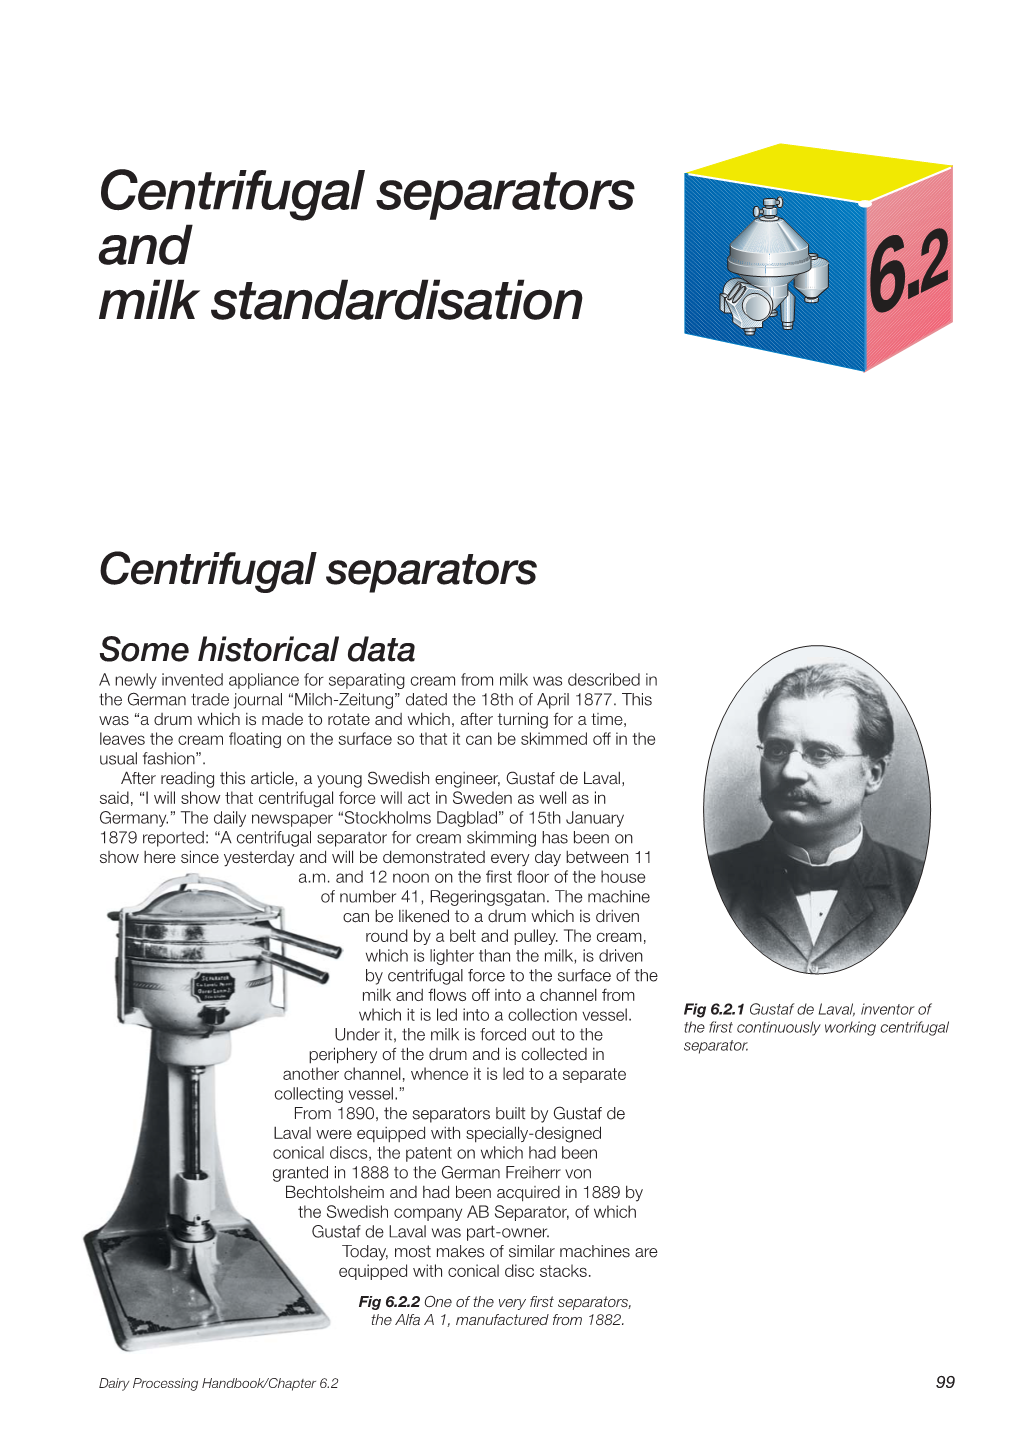 Centrifugal Separators and Milk Standardisation